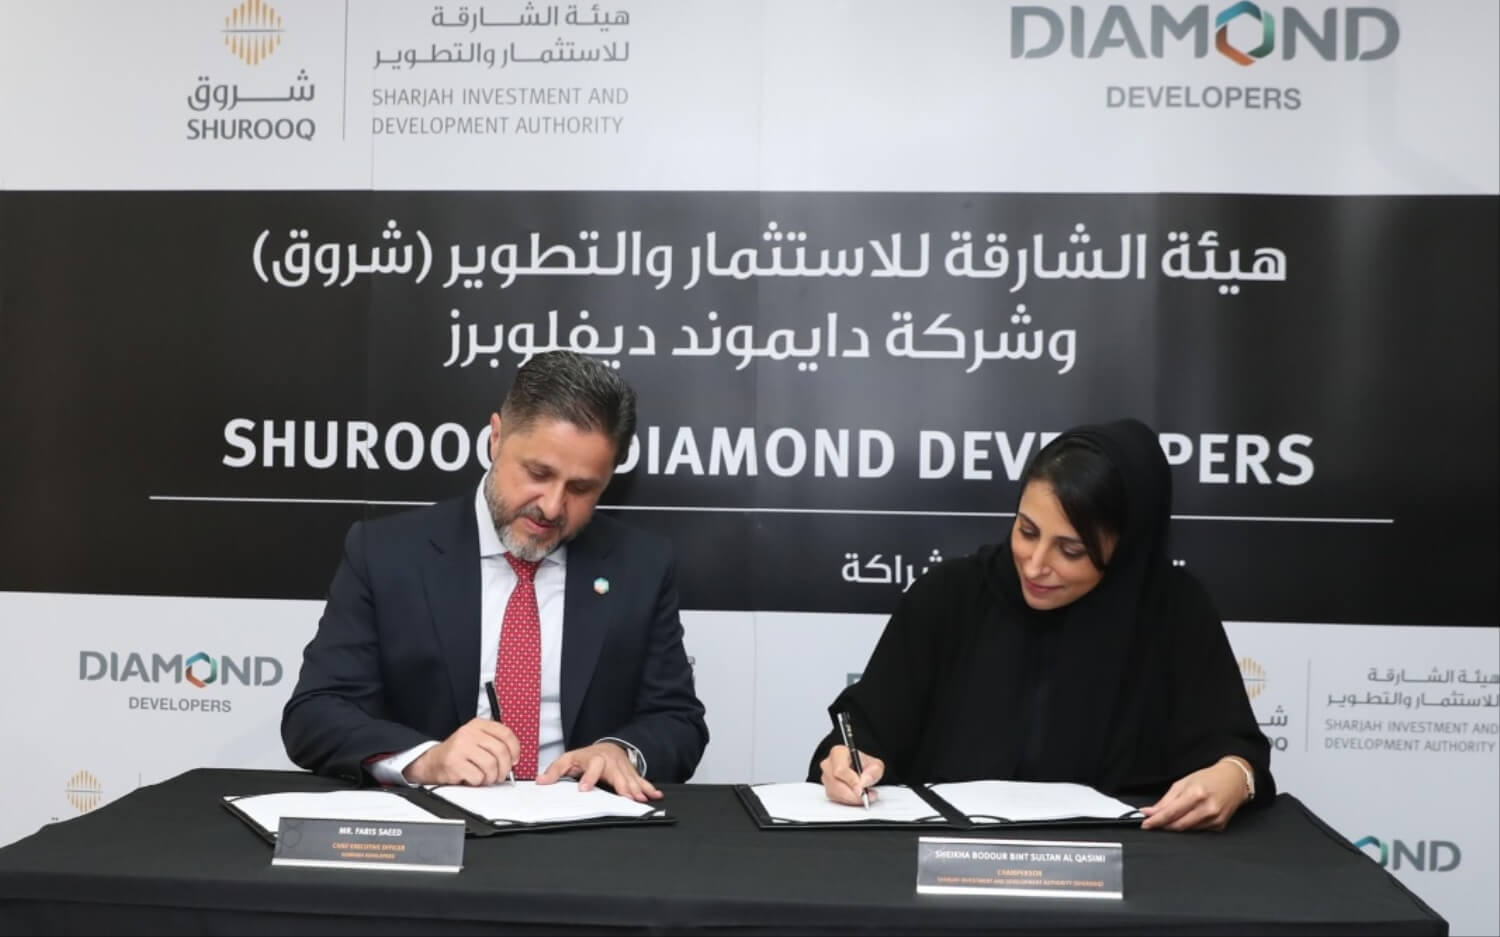 Shurooq, Diamond Developers sign partnership agreement